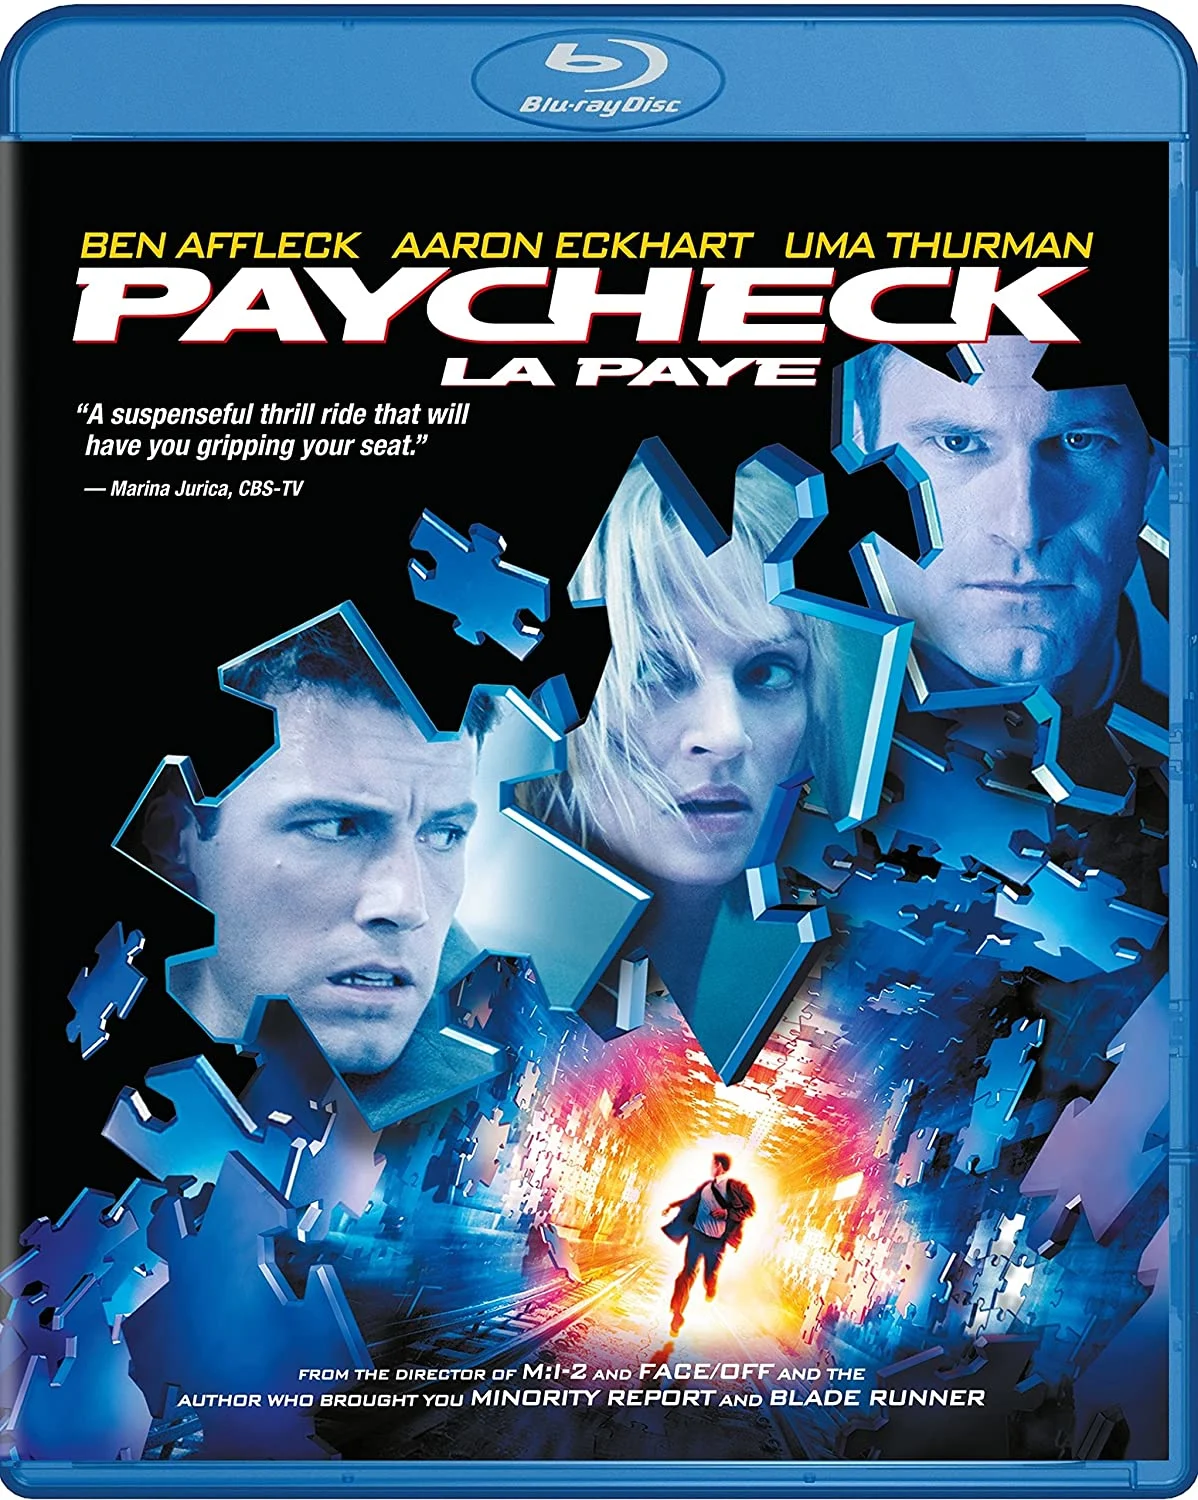 Paycheck (Blu-ray) on MovieShack